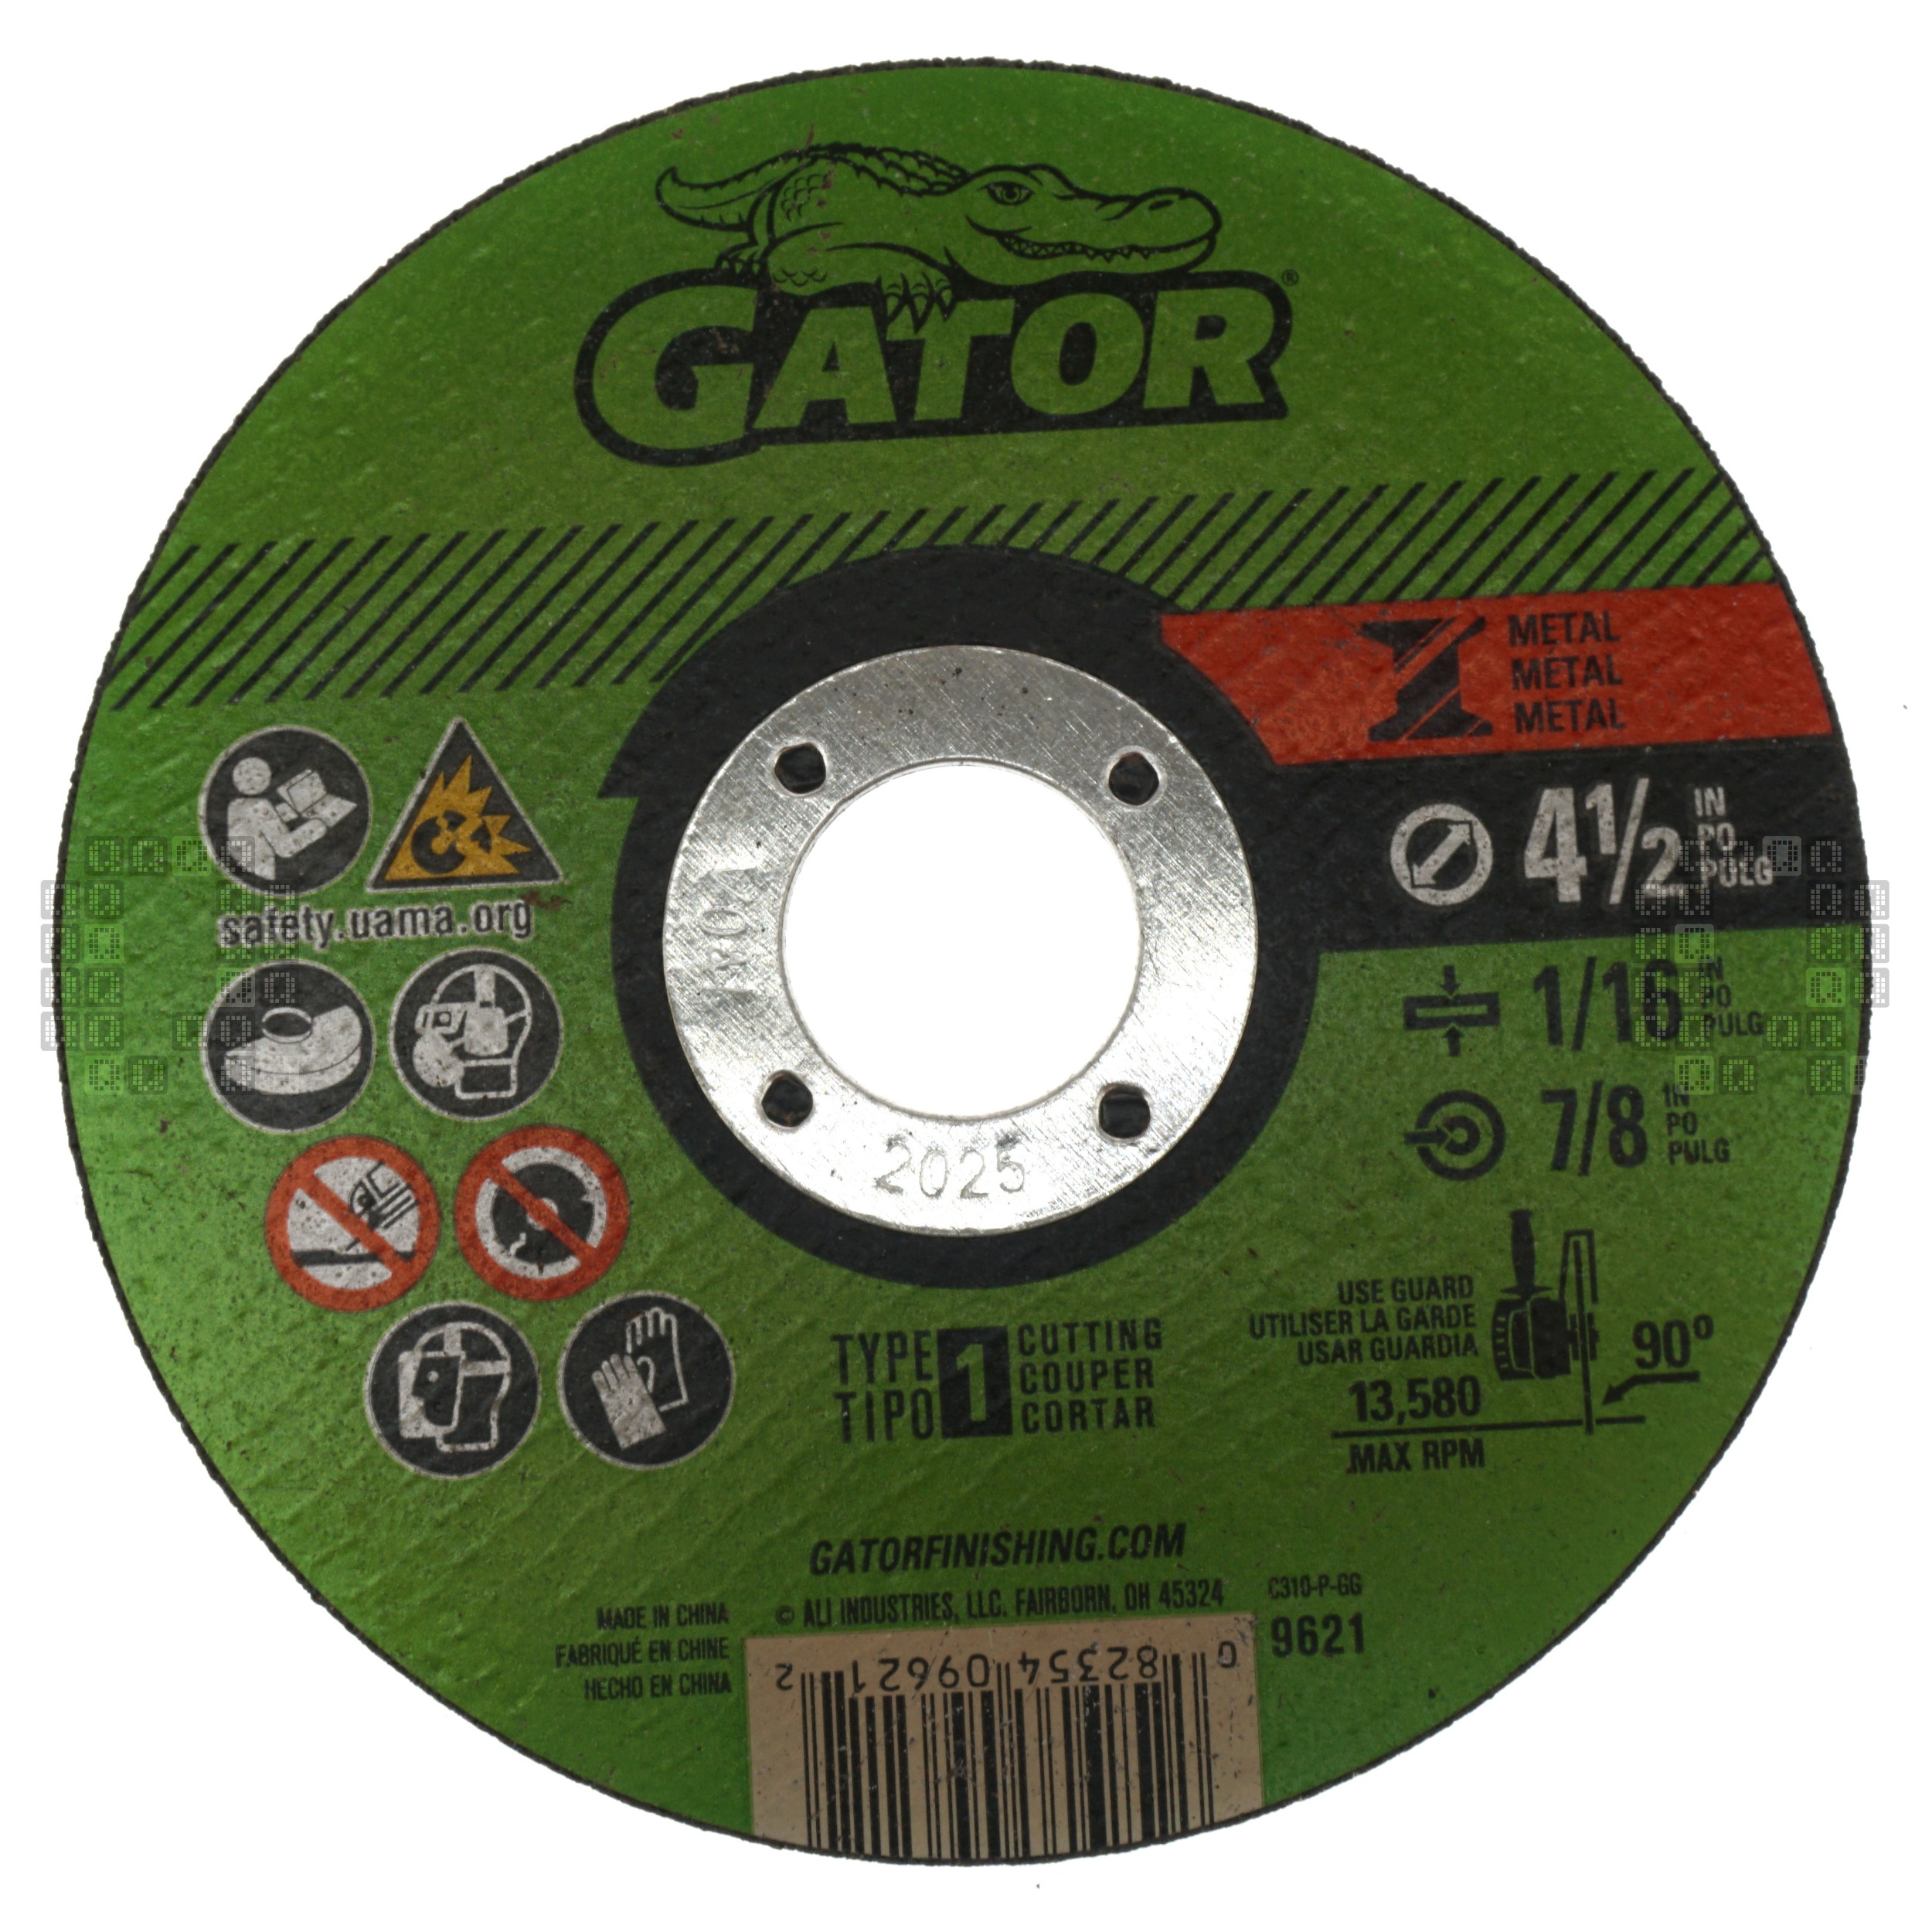 Gator 9621 4-1/2" Metal Cut-Off Blade, 1/16" Thickness, 7/8" Arbor, Type 1